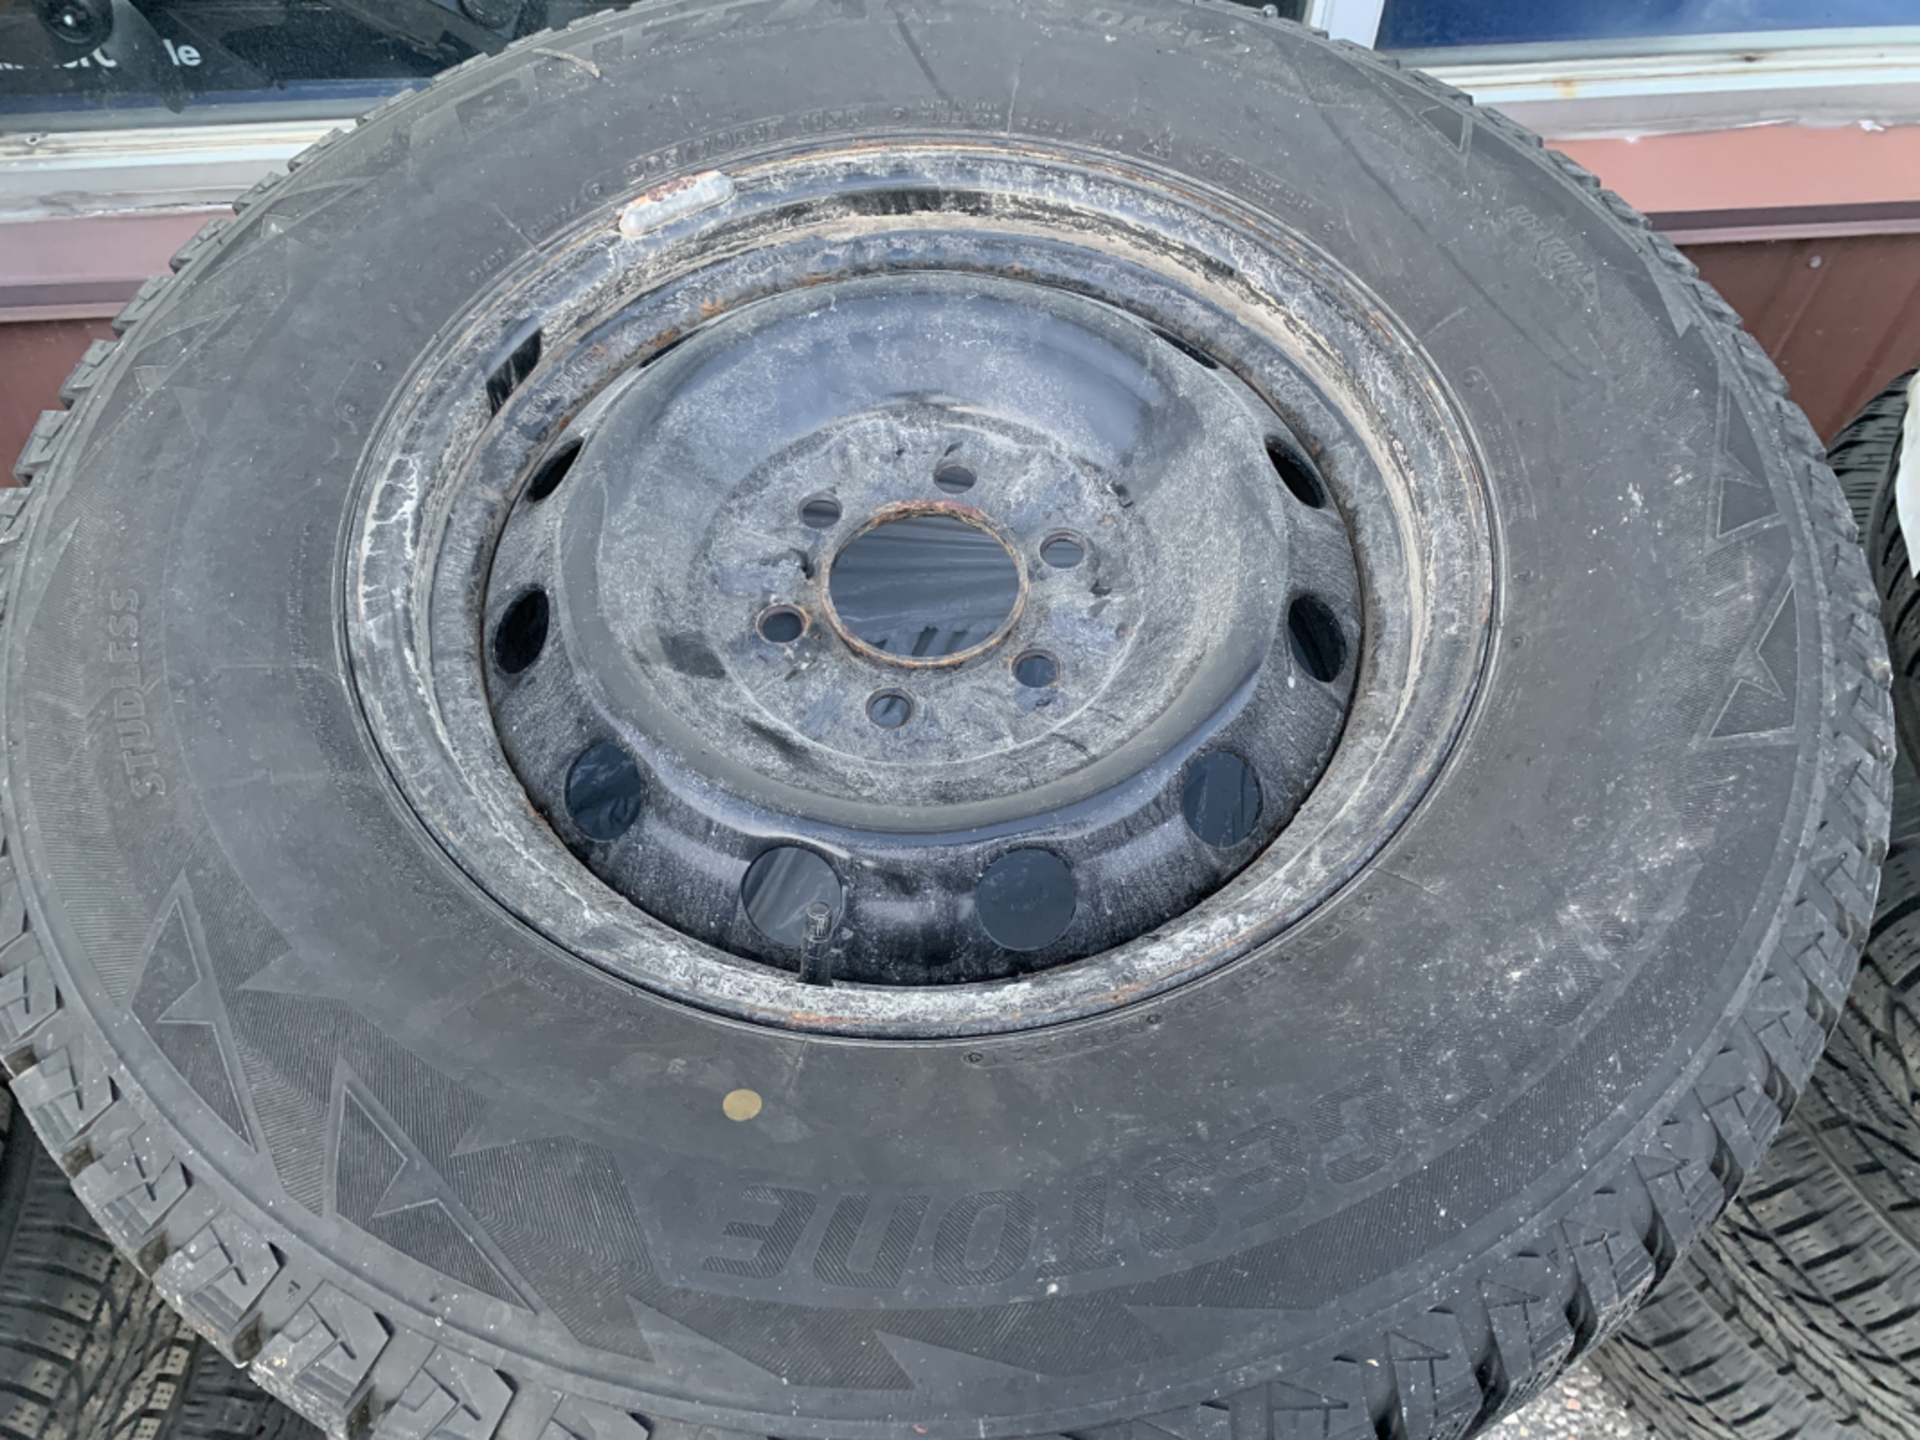 Bridgestone - Blizzak DM-V2 Winter Tires - Size: 265/70/R17 - Qty: 4 - Image 2 of 4